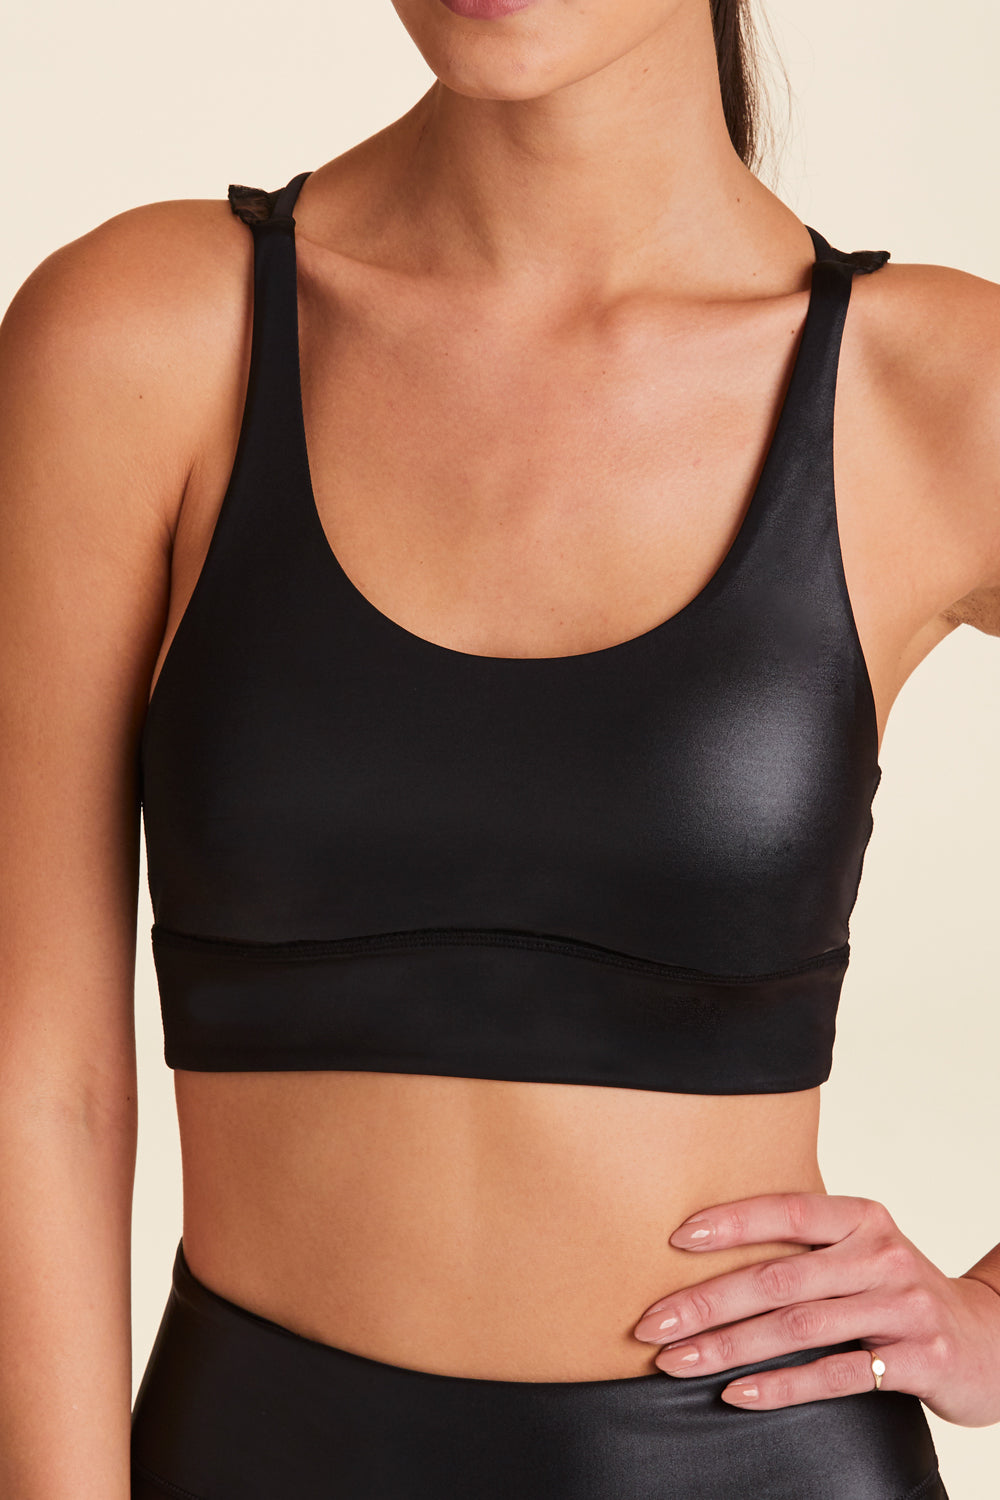 lululemon launches the ultimate running bra for sizes C - E